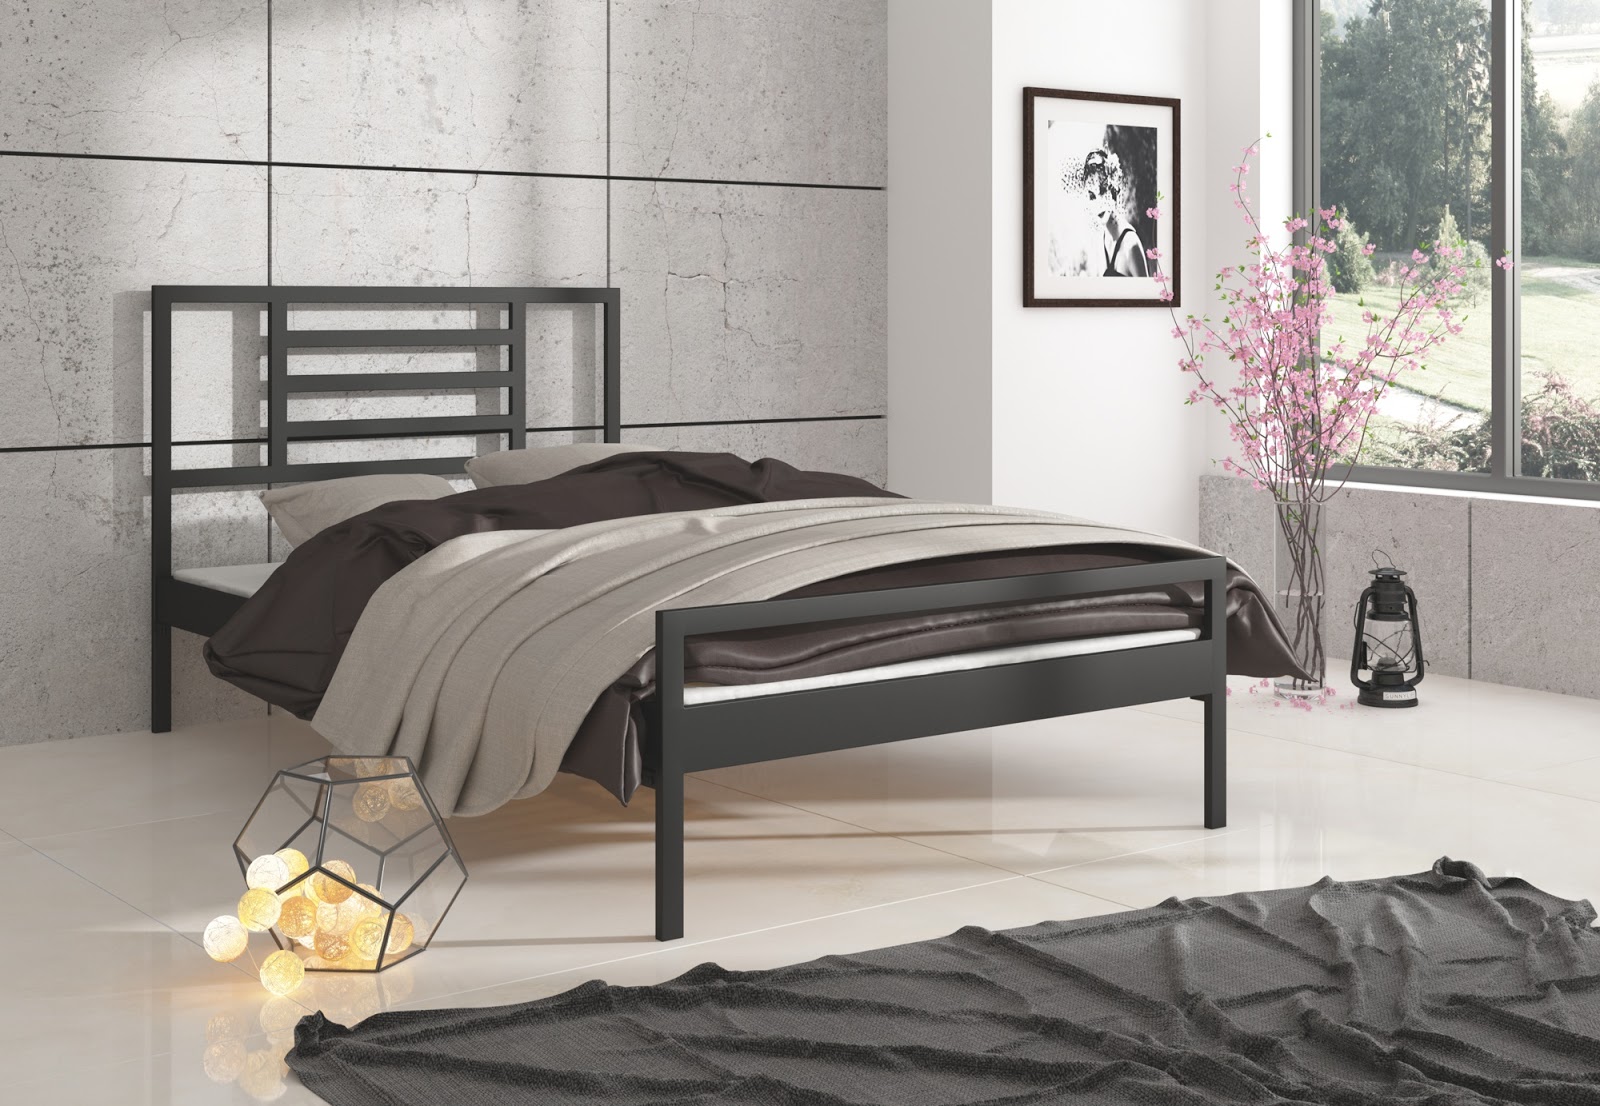 Łóżko metalowe wzór 33 (120-160 cm)